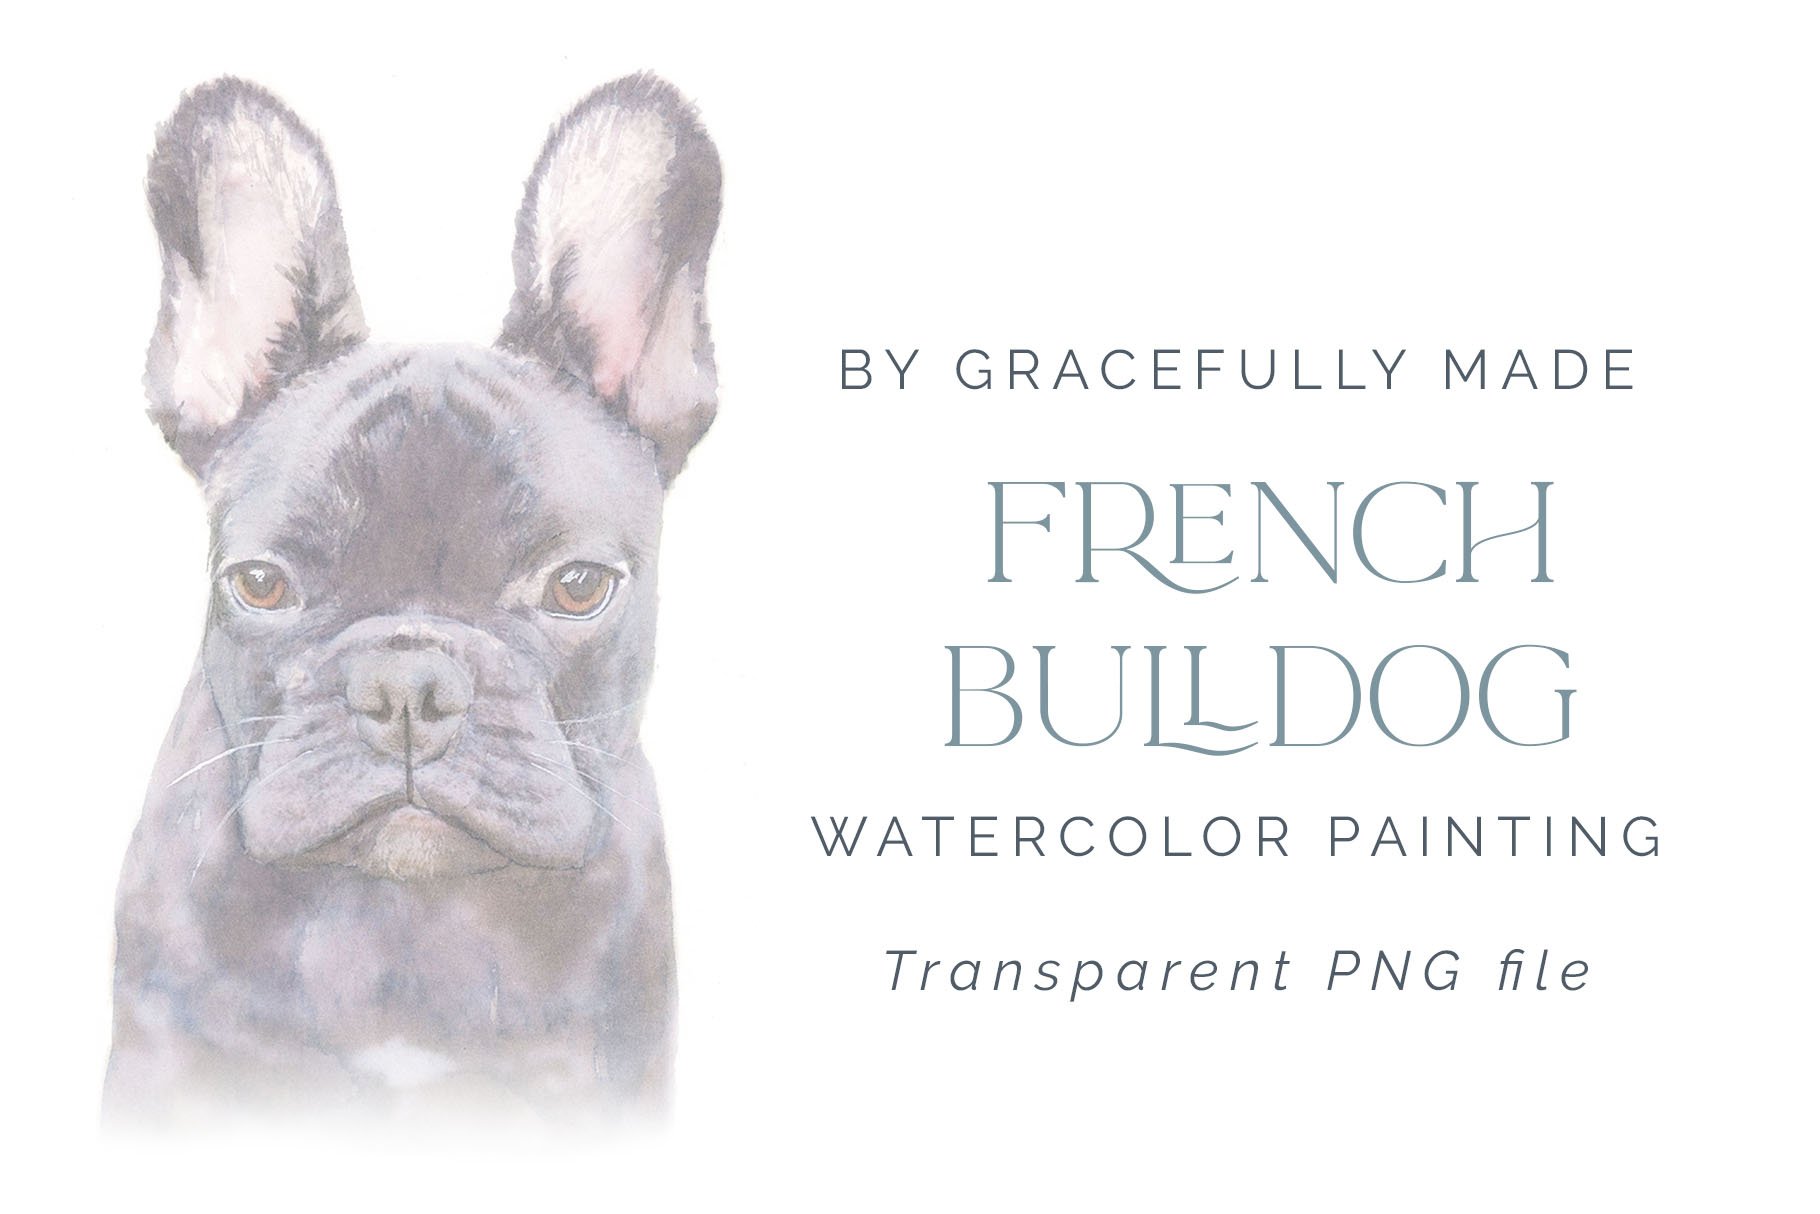 French Bulldog Watercolor cover image.